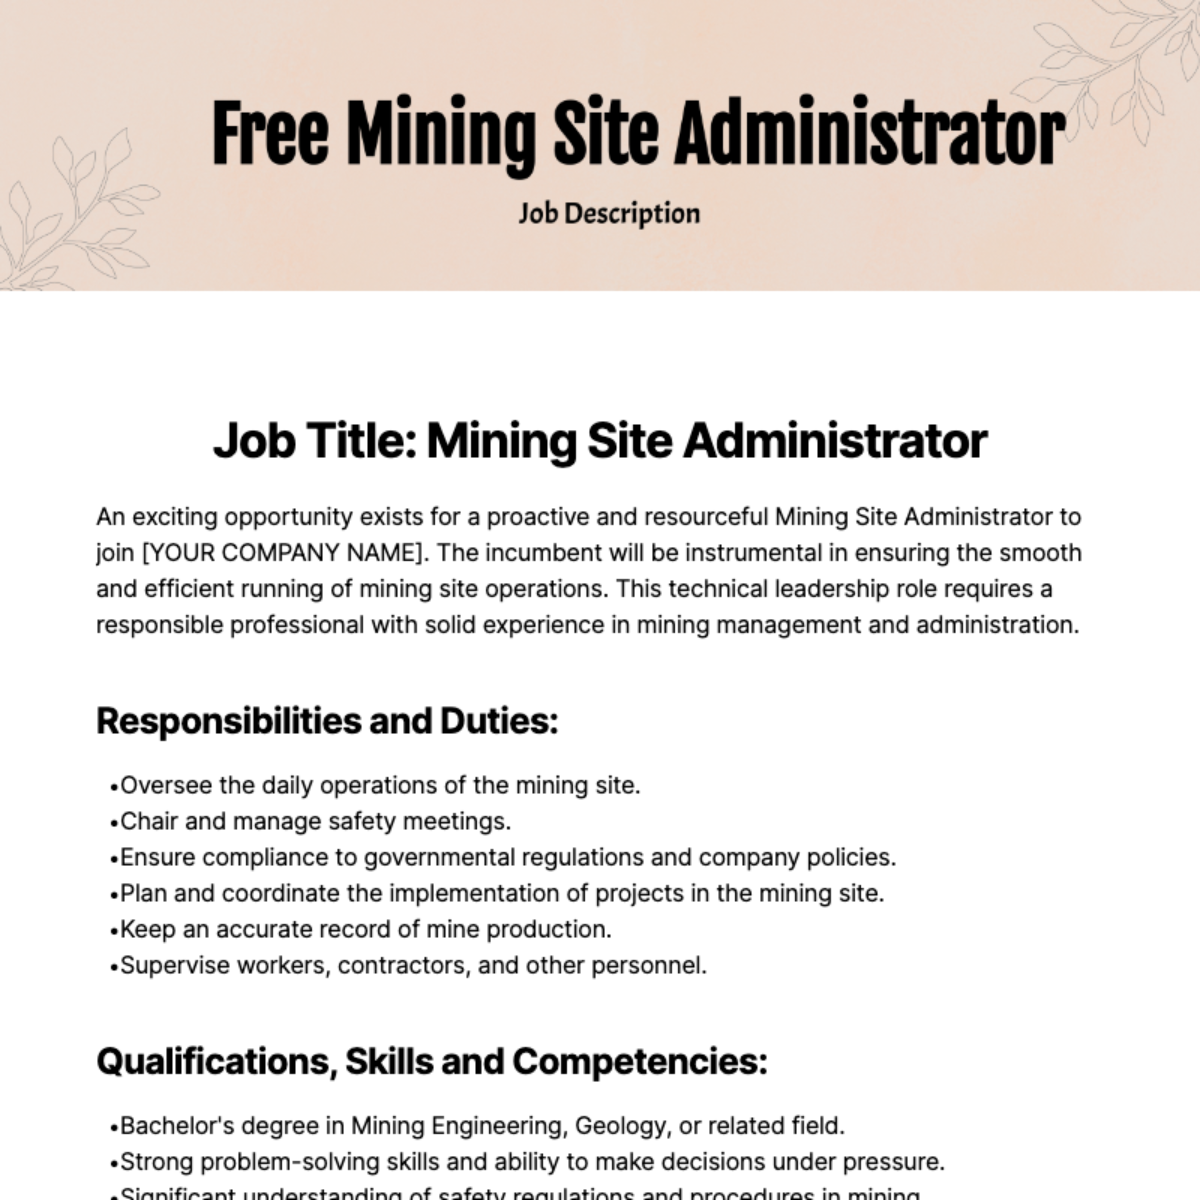 Mining Site Administrator Job Description Template